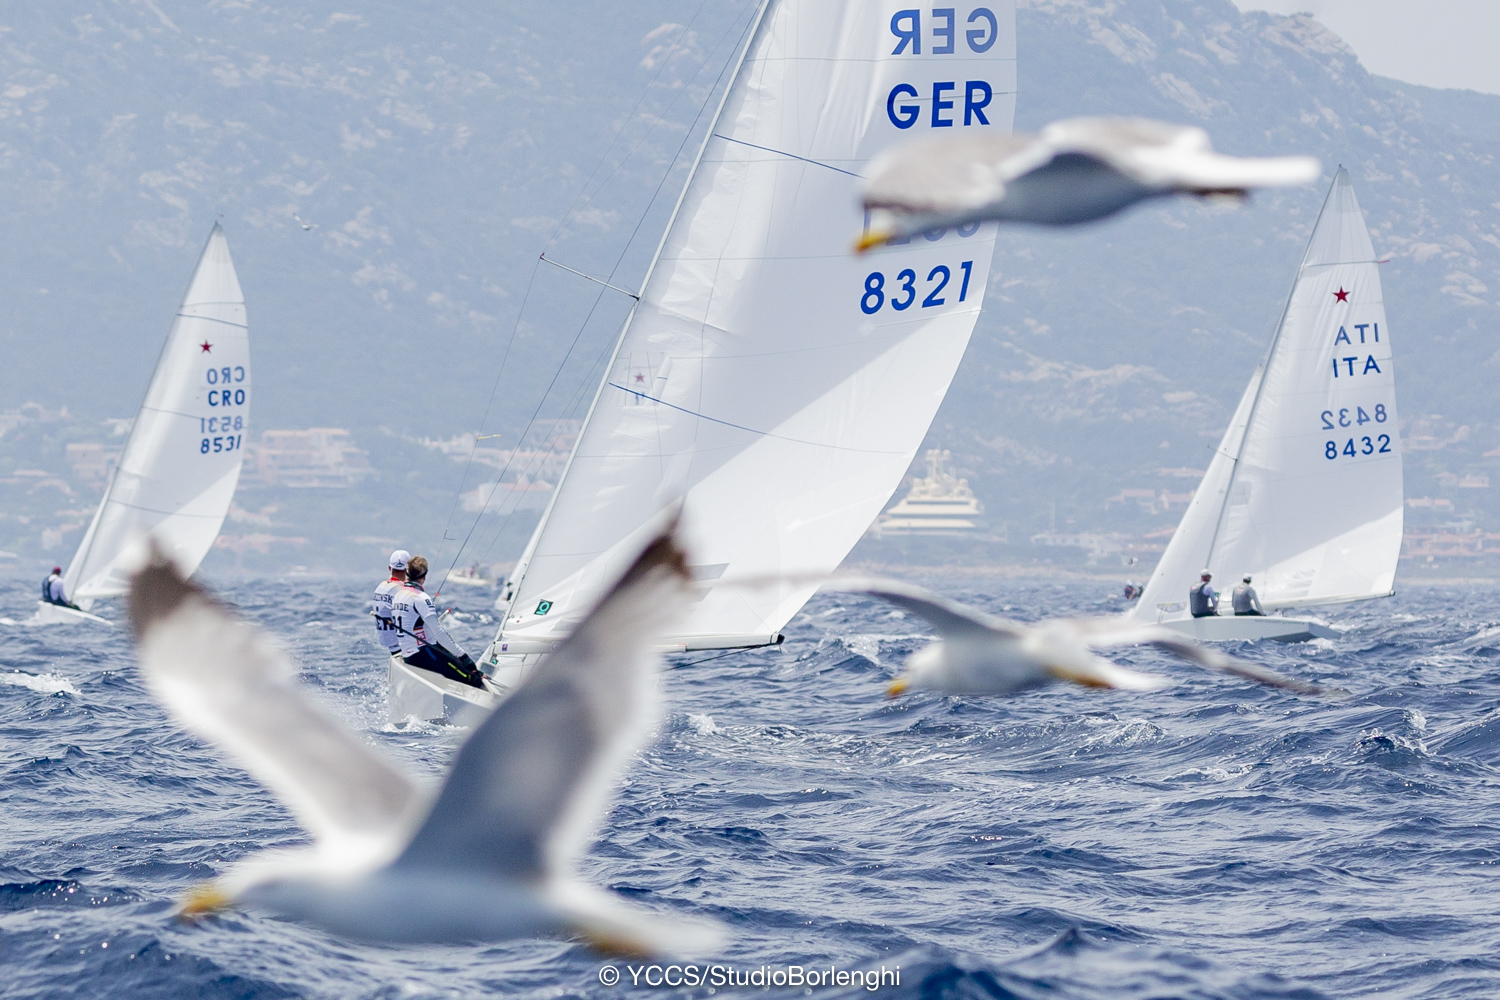 STAR WORLD CHAMPIONSHIP - FOTO DAY 5 ONLINE - NEWS - Yacht Club Costa Smeralda